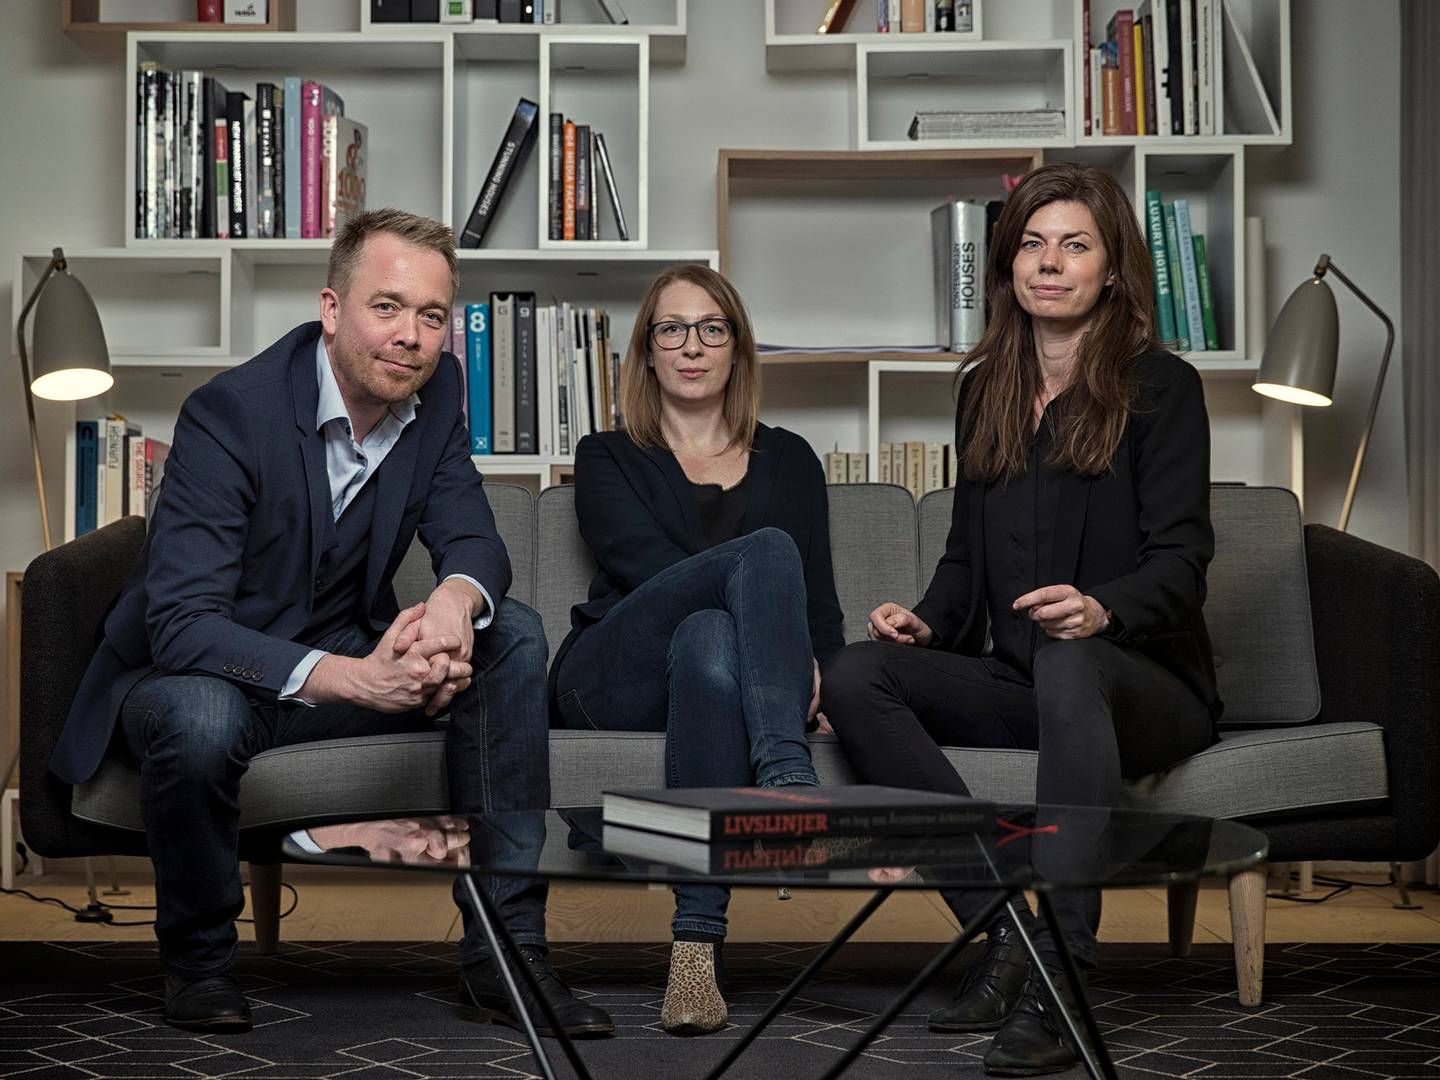 De tre nye partnere hos Årstiderne Arkitekter: Fra venstre Kaare Dahlmann, Lene Foder og Nina Bang. | Foto: PR